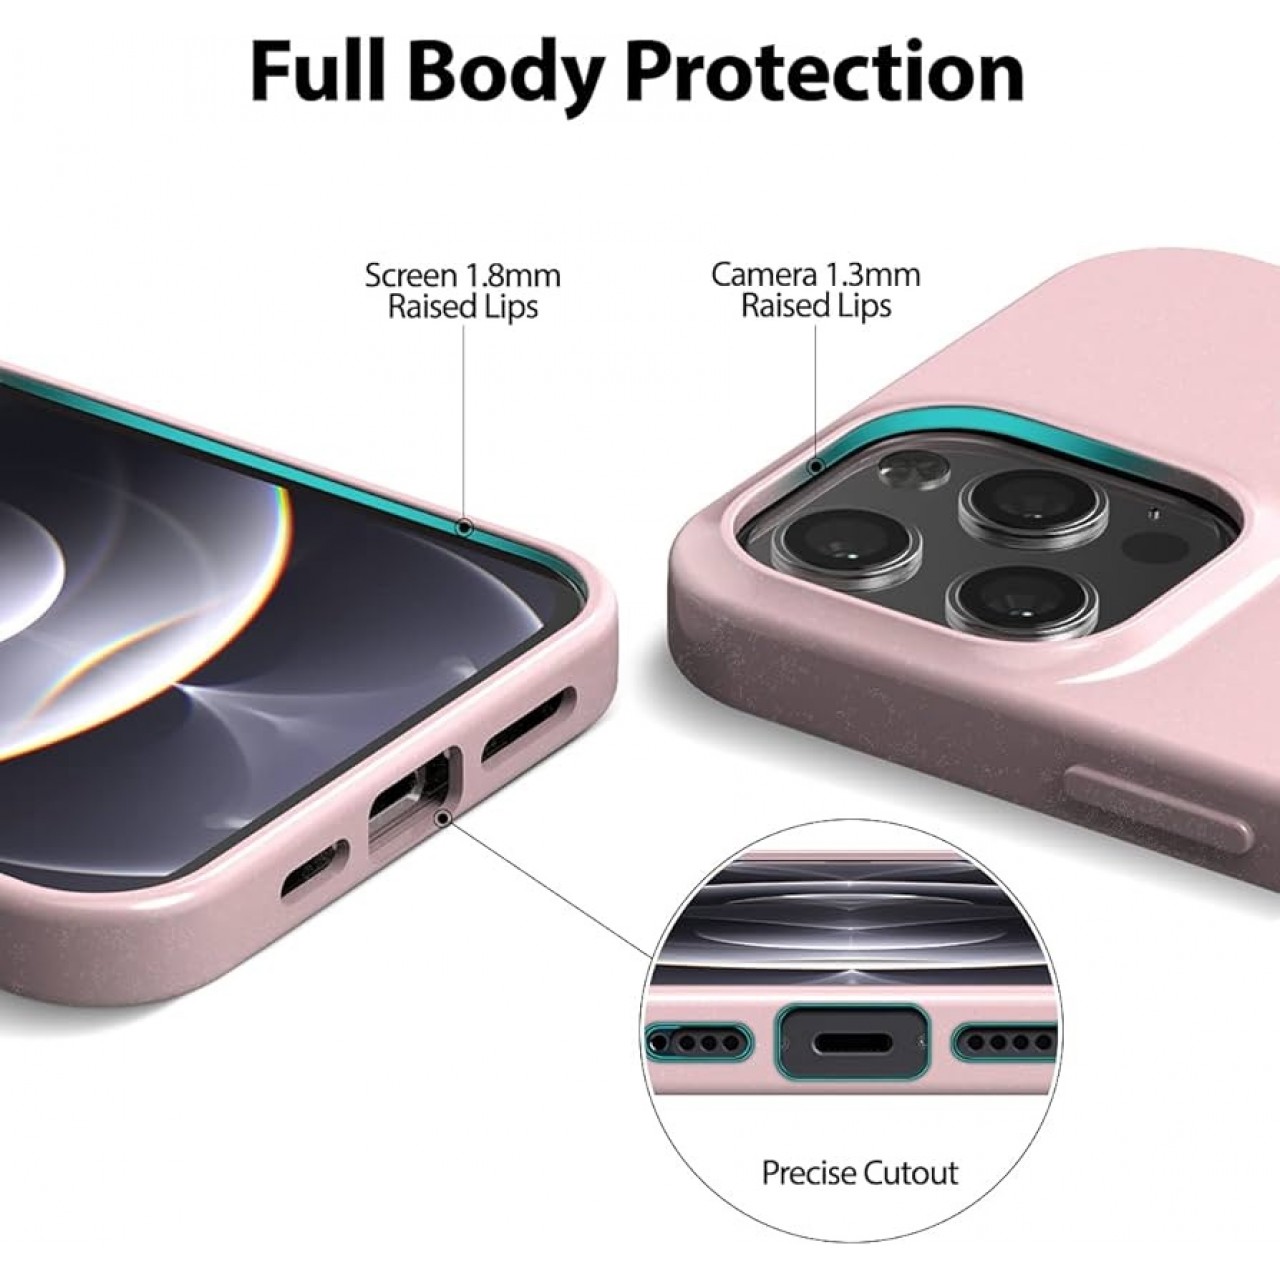 iPhone 11 Pro Θήκη Σιλικόνης - Back Silicone Case Light Grey